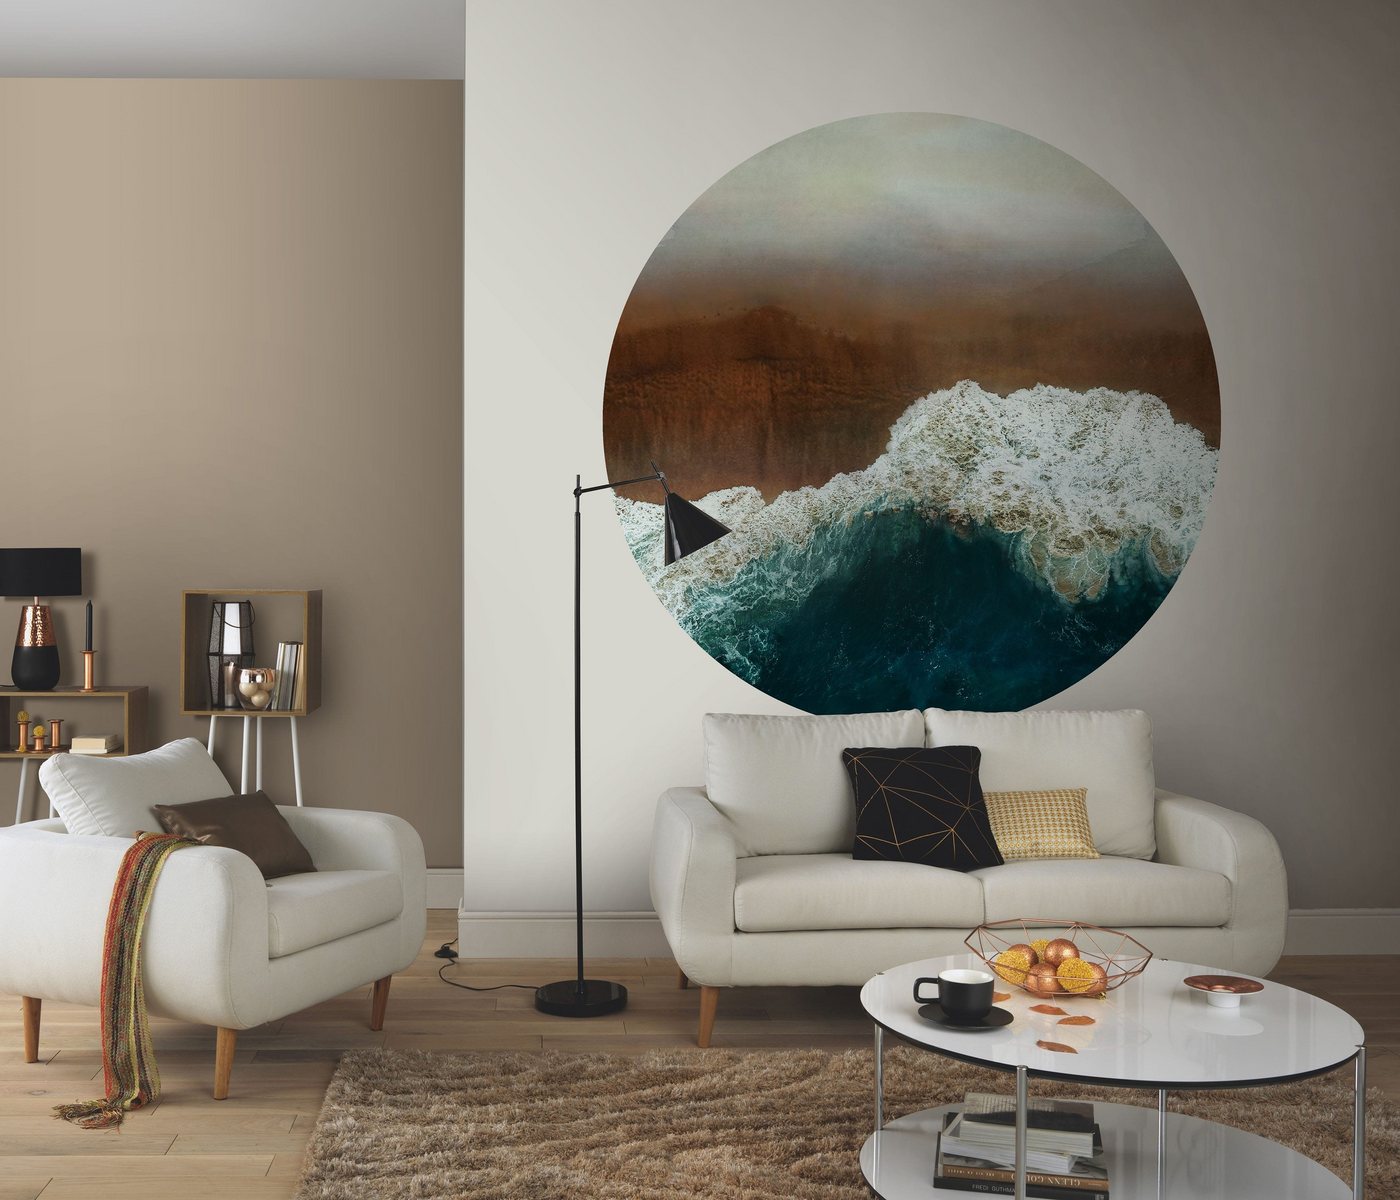 Newroom Vliestapete, [ 1,4 x 1,4 m ] großzügiges Motiv - kein wiederkehrendes Muster - Fototapete Wandbild Wasser Wellen Meer Made in Germany von Newroom